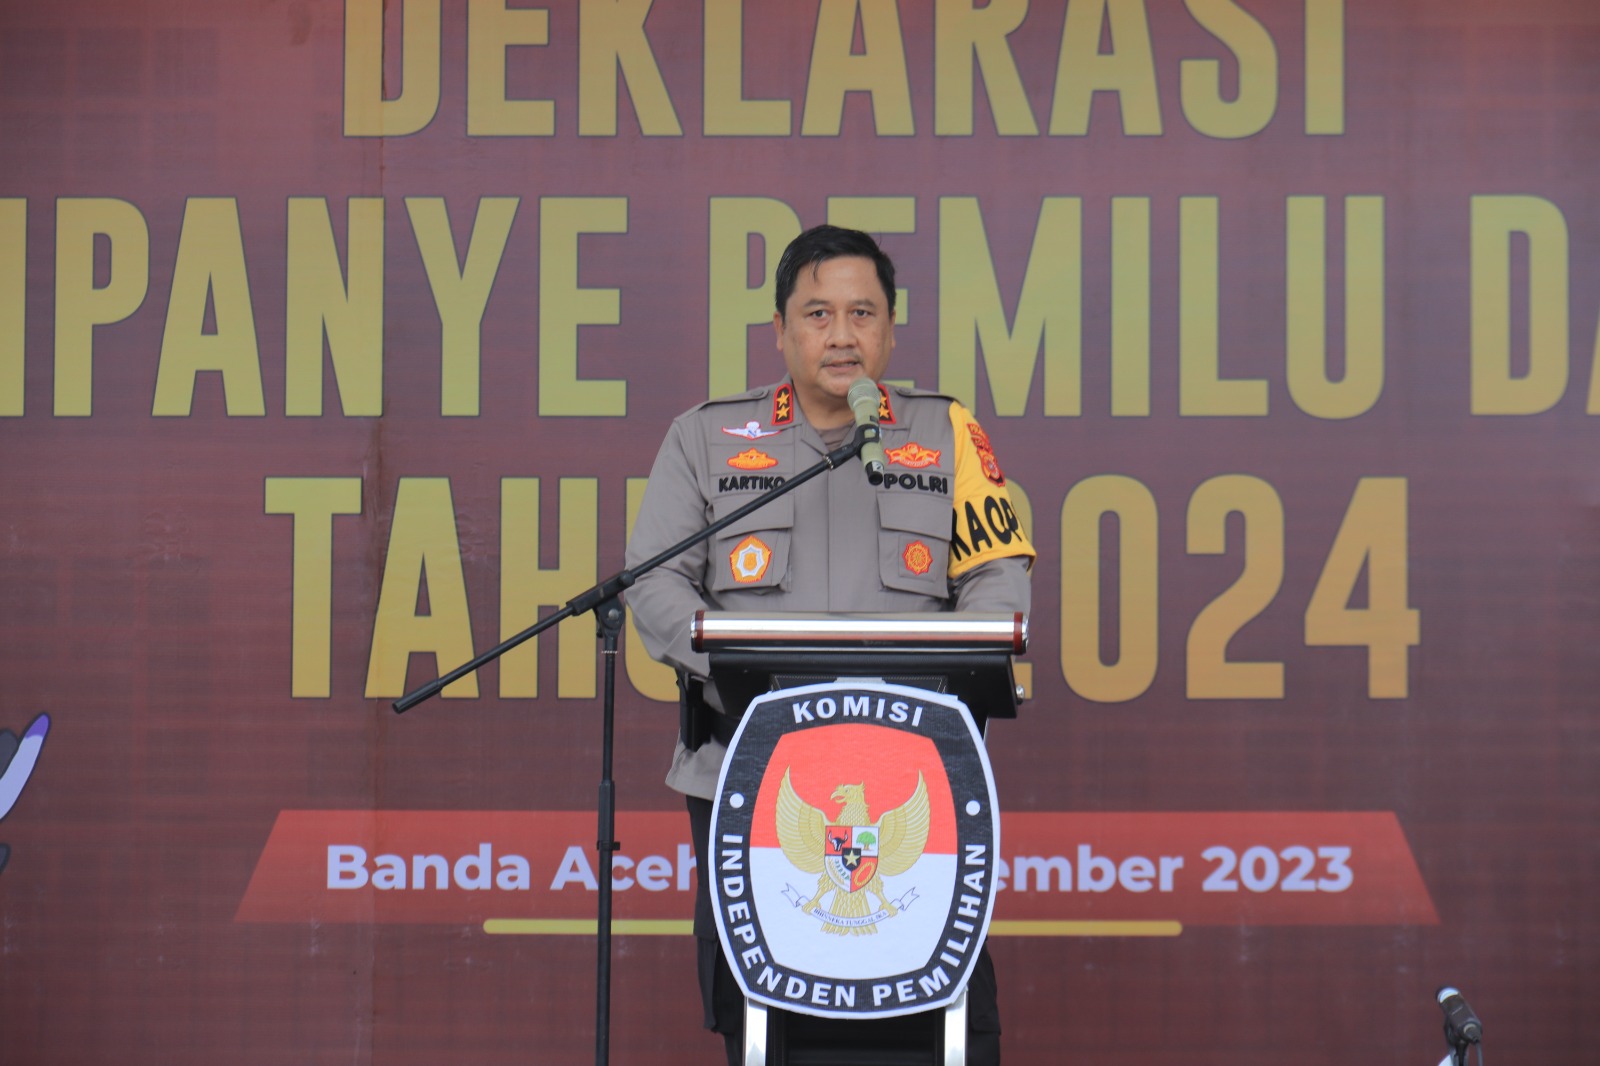 Kapolda Aceh bersama Forkopimda Hadiri Deklarasi Kampanye Pemilu Damai 2024